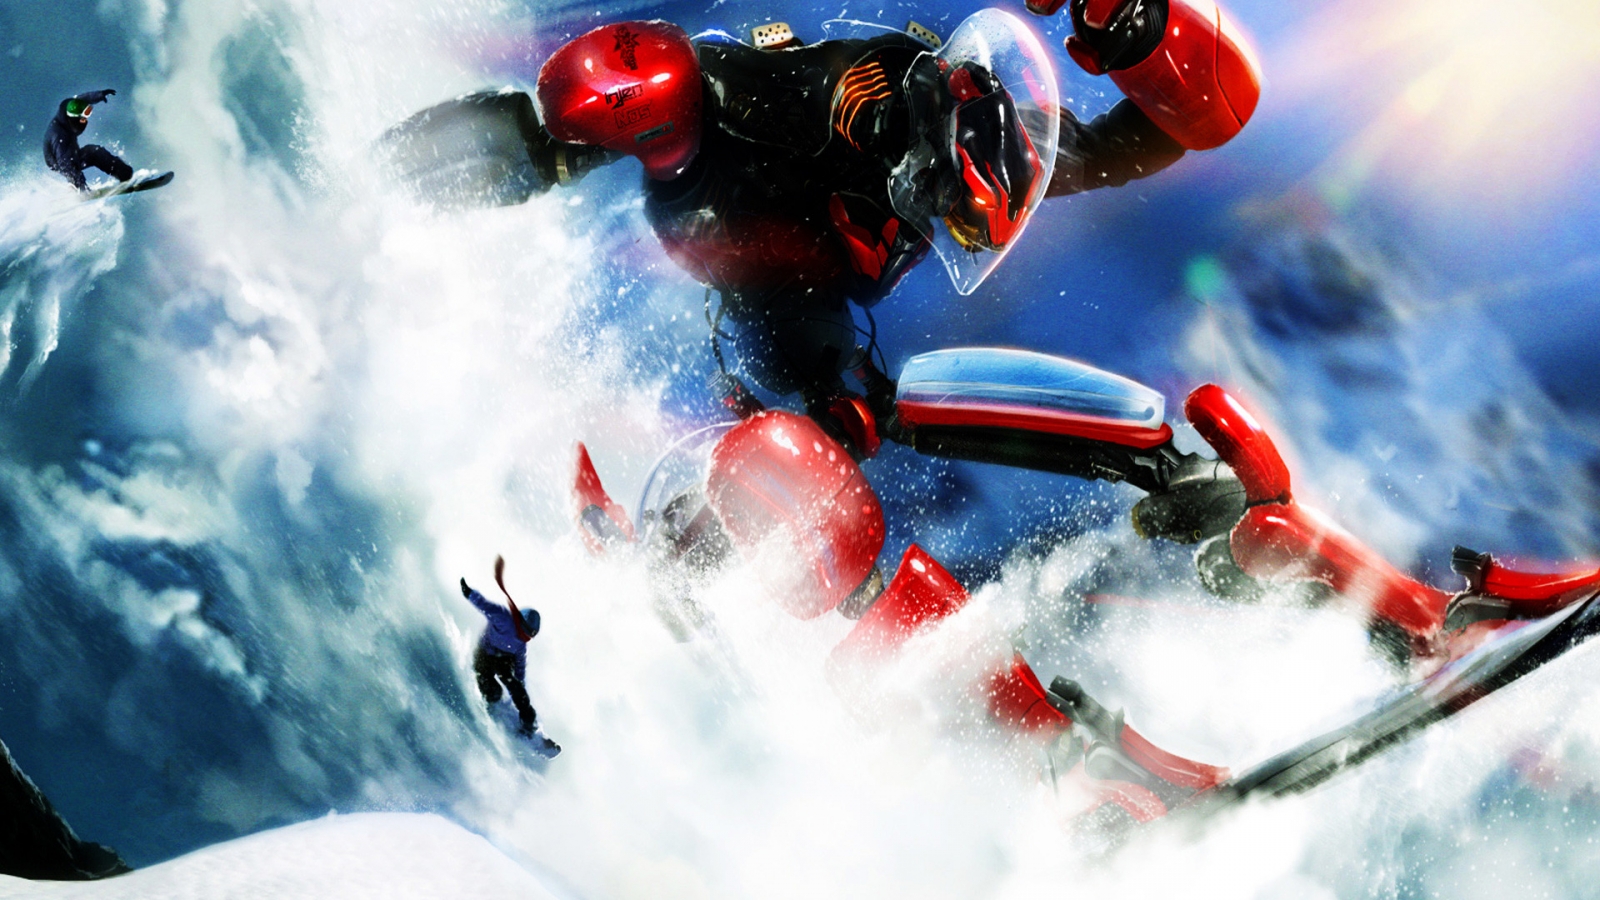 Fantasy Snowboarding for 1600 x 900 HDTV resolution